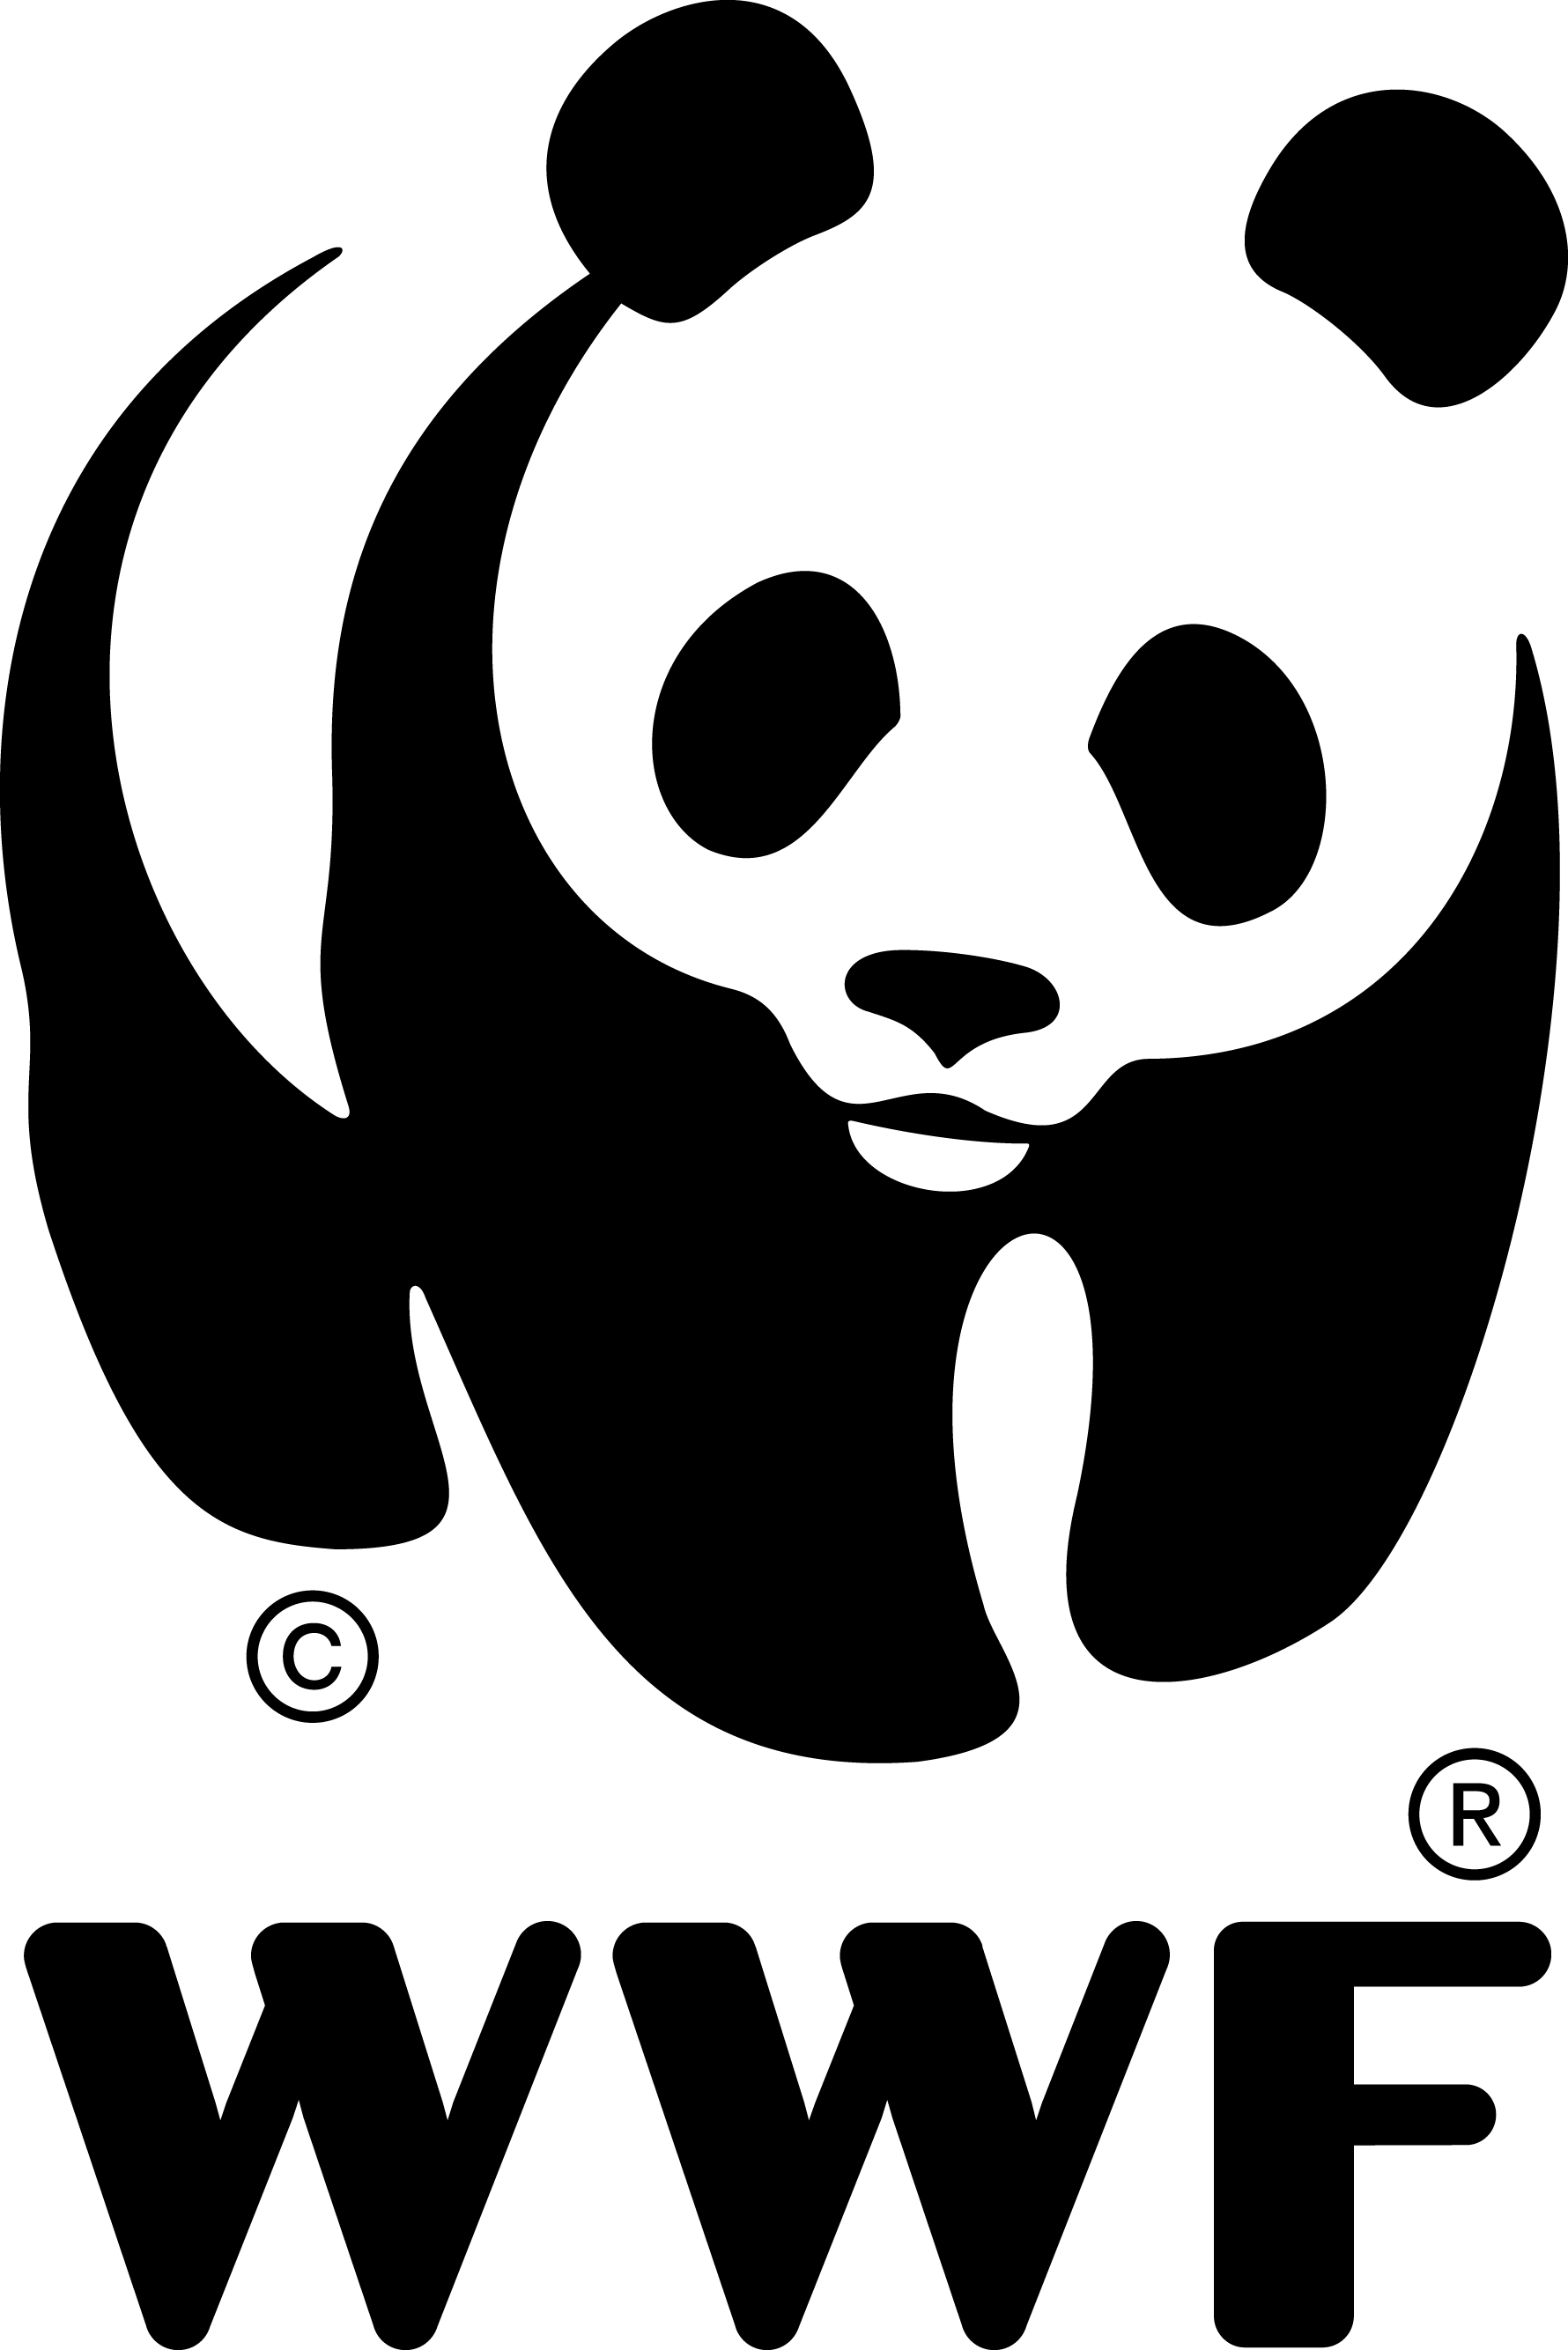 WWF - World Wildlife Fund logo